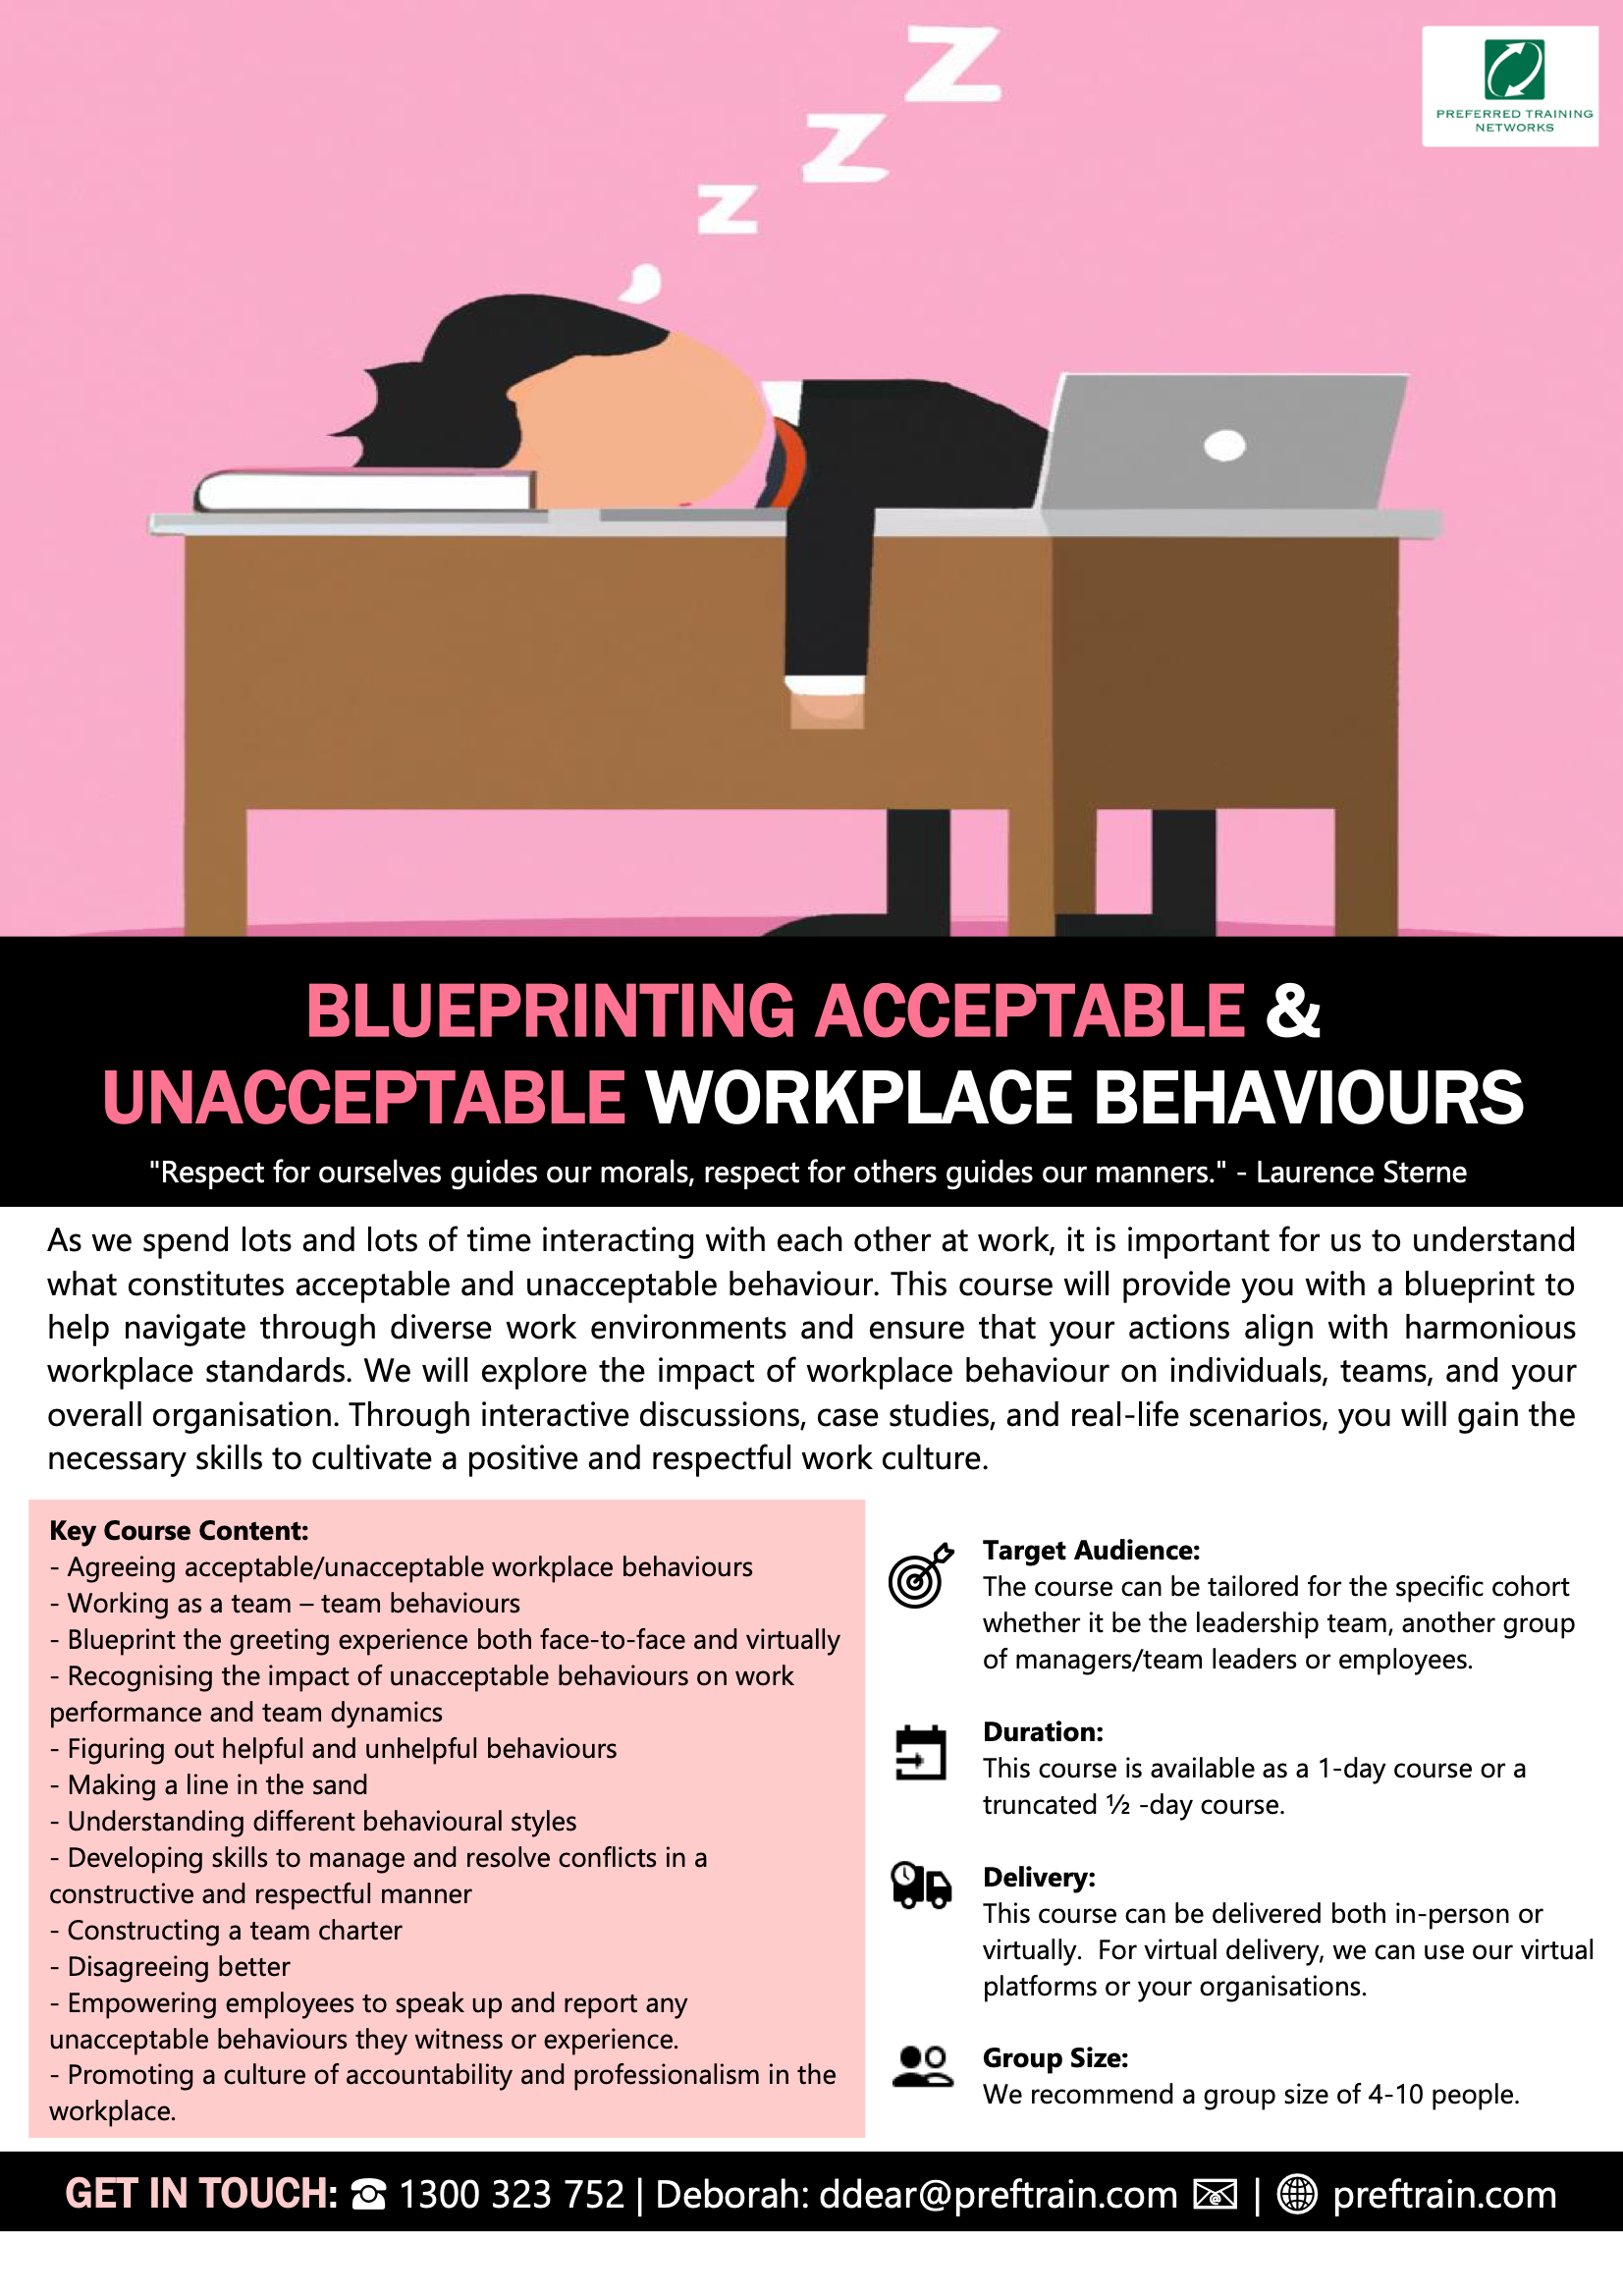 Blueprinting Acceptable & Unacceptable Workplace Behaviours